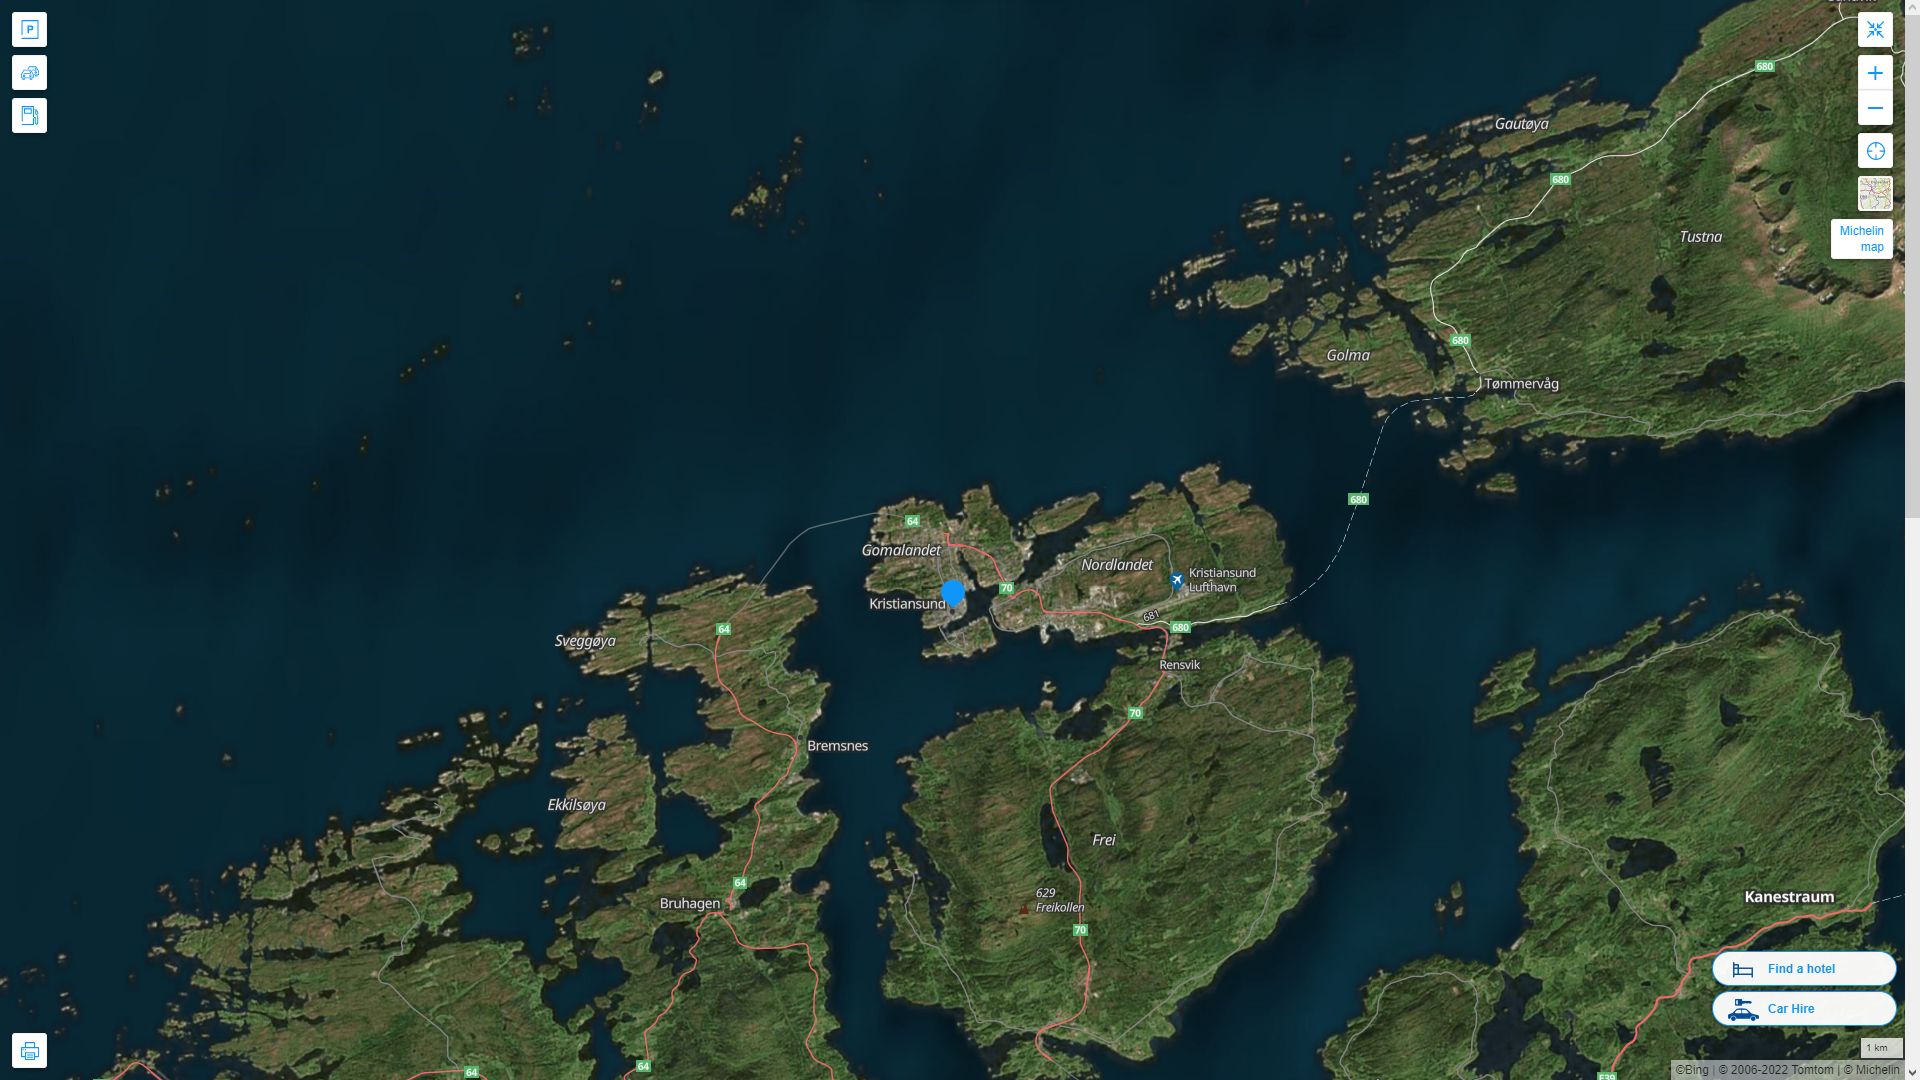 Kristiansund Norvege Autoroute et carte routiere avec vue satellite